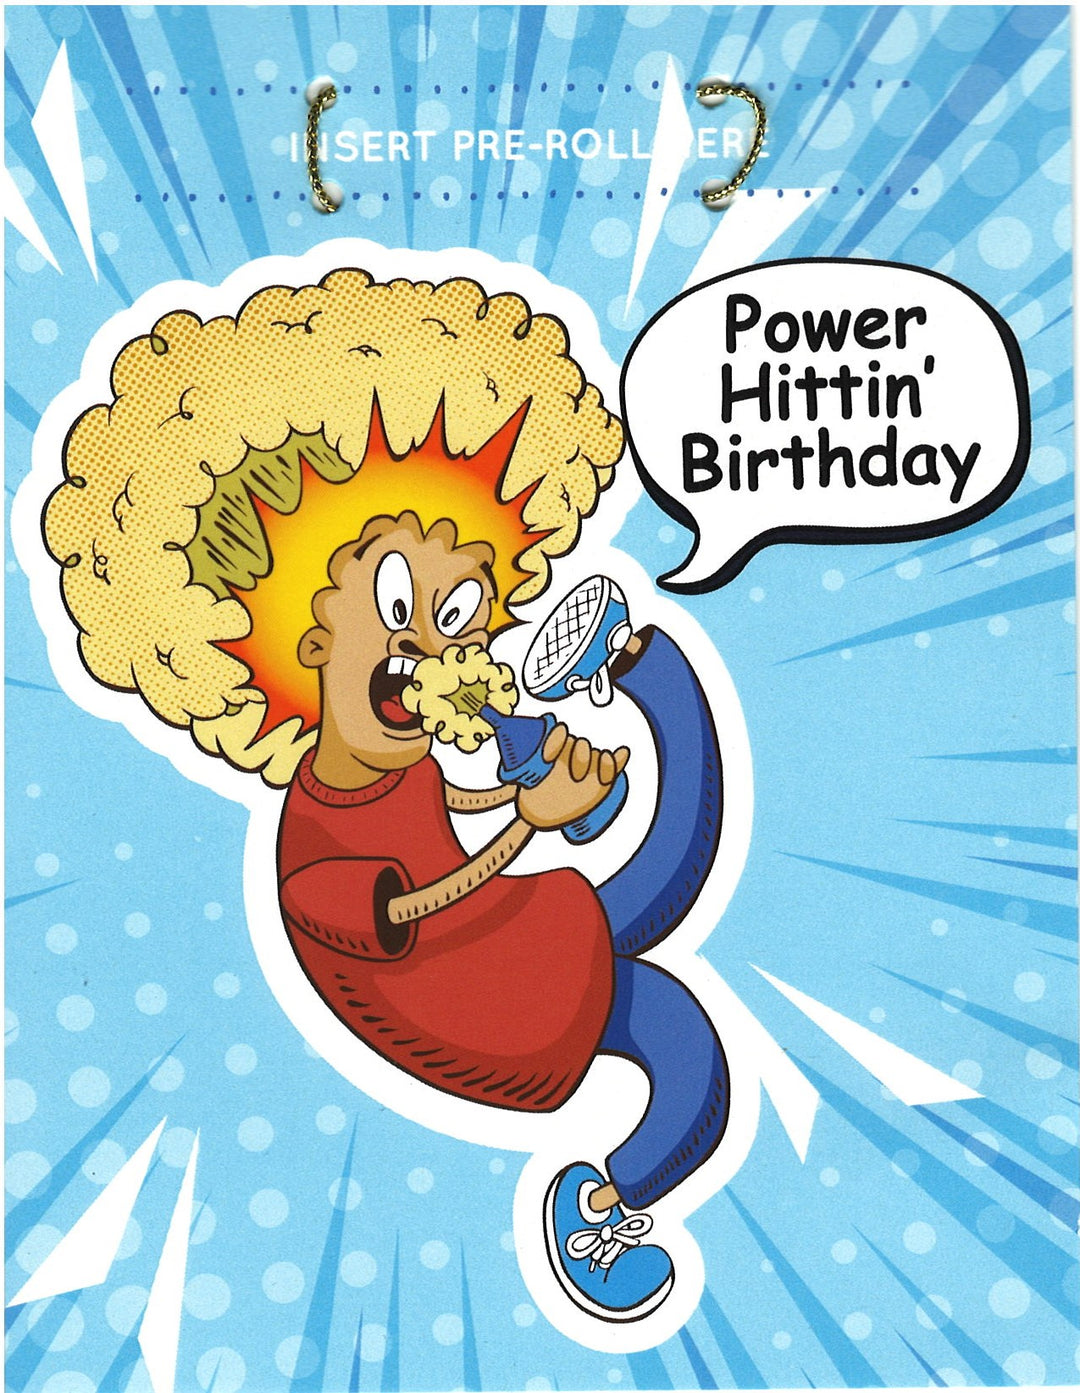 PowerHitter “Power Hittin’ Birthday” Card